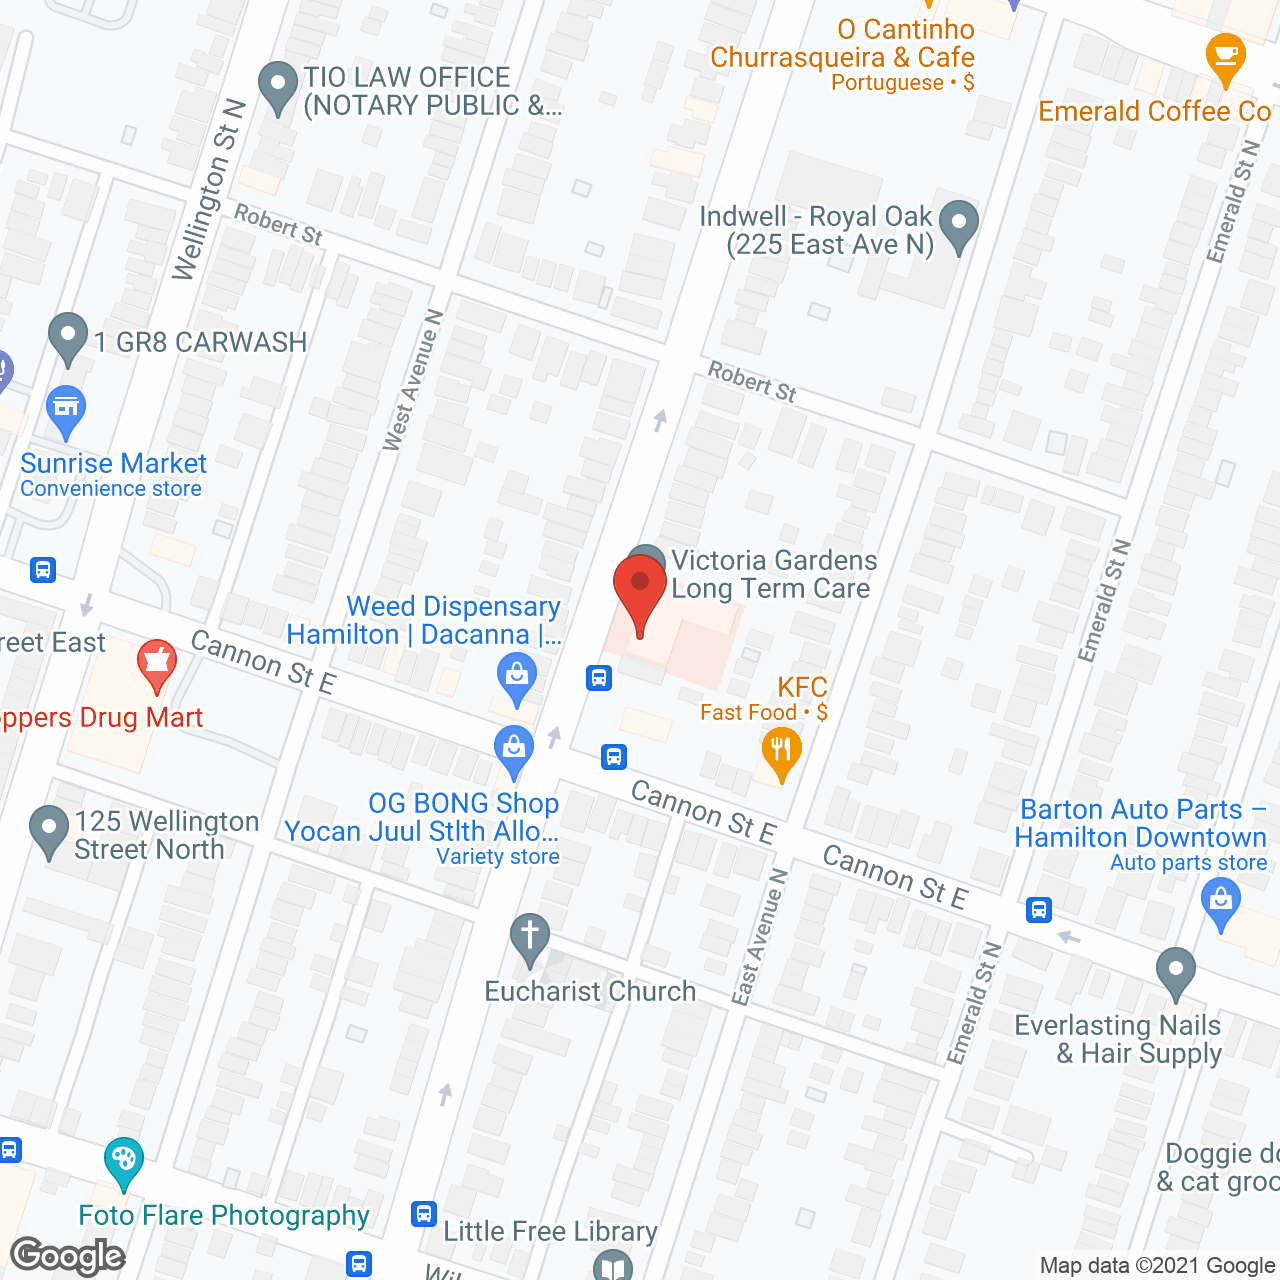 Victoria Gardens Long Term in google map